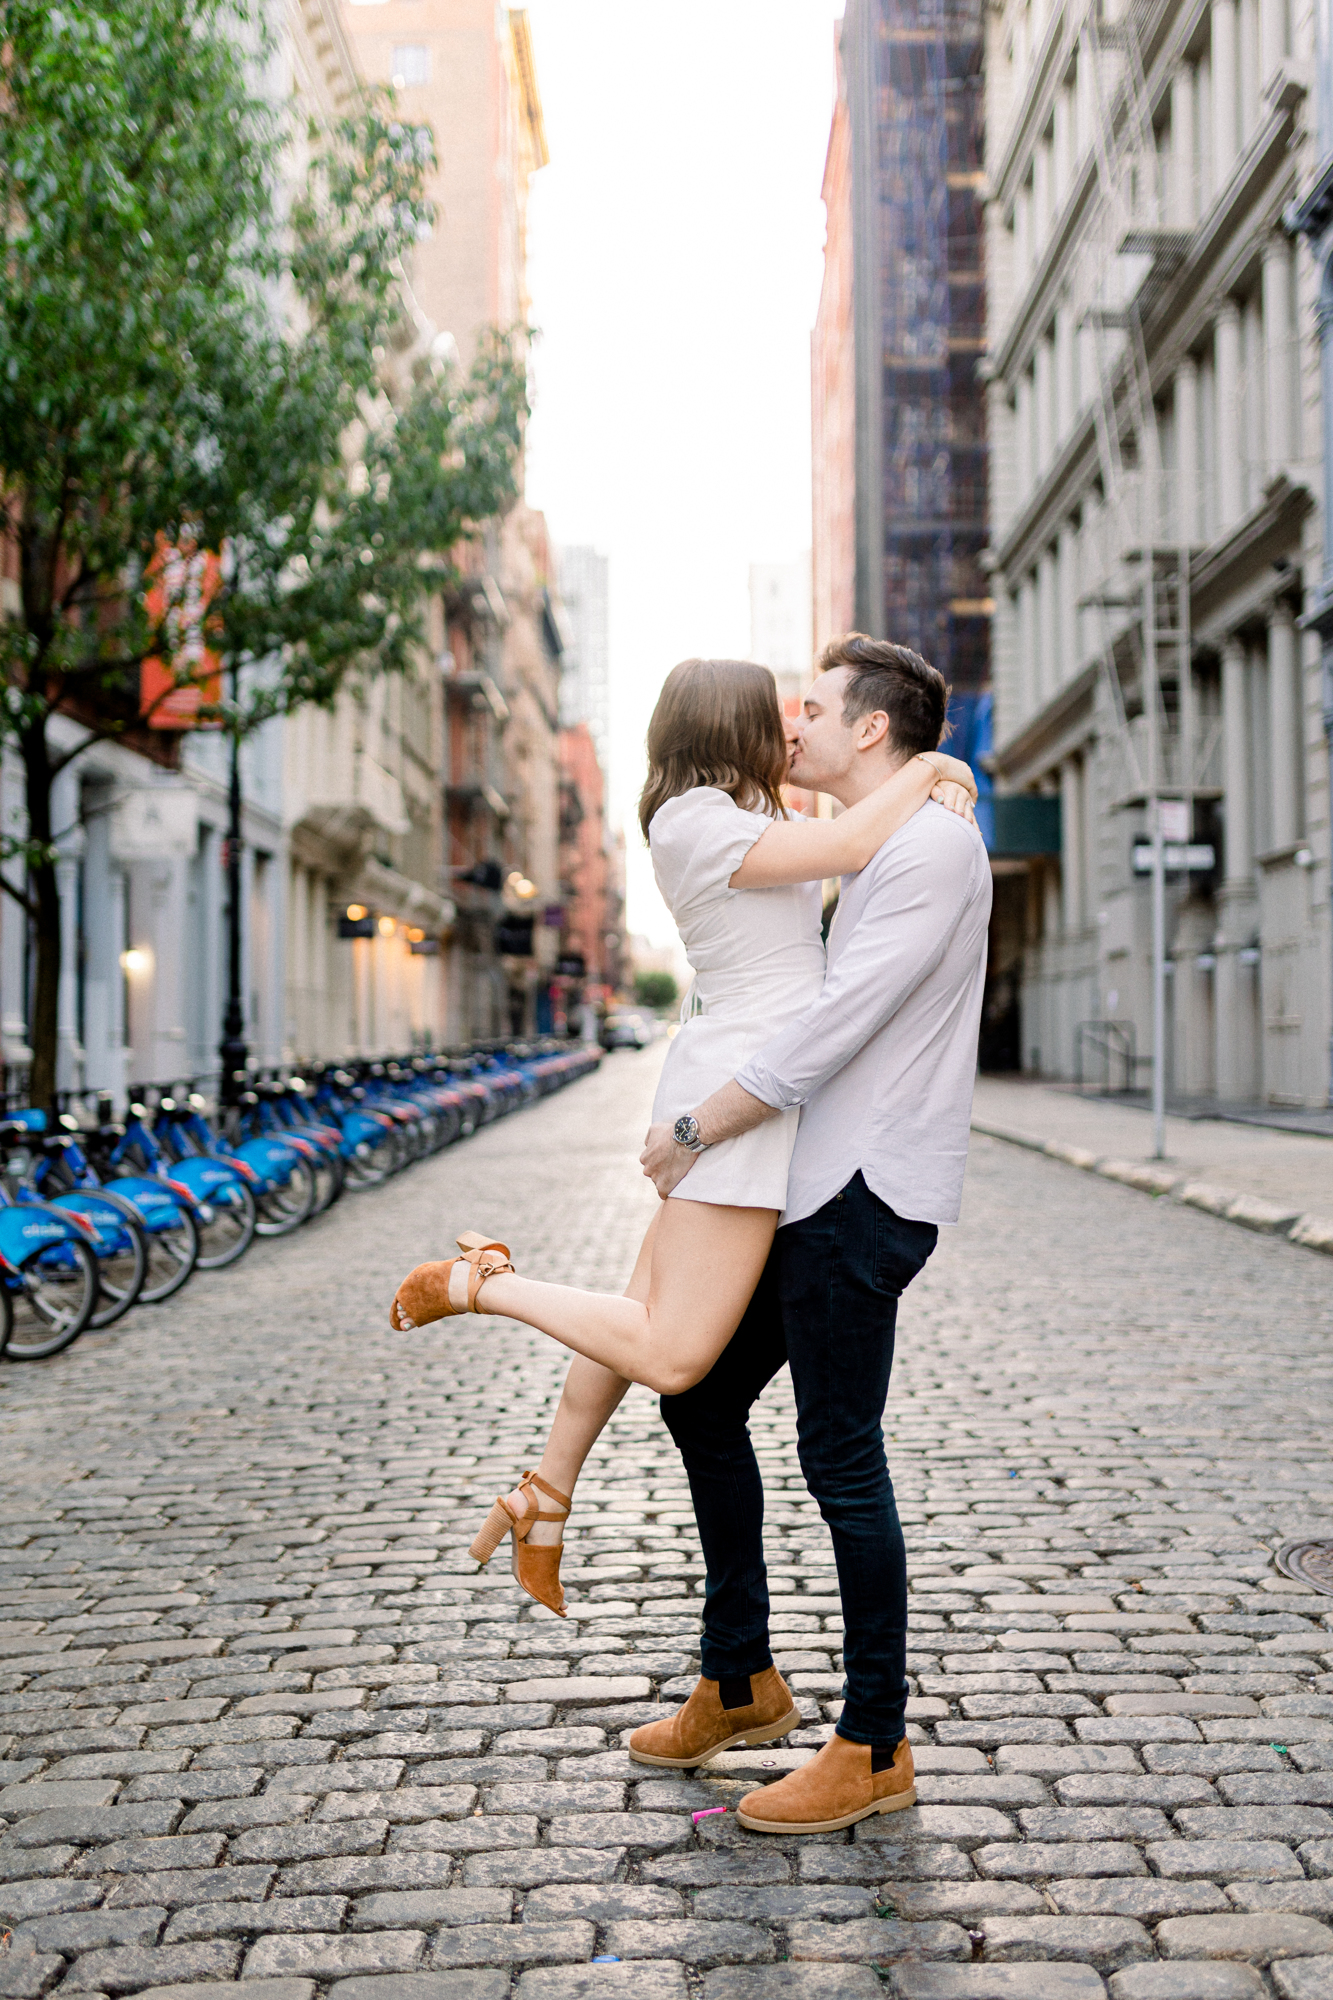 Wonderful Engagement Photos in Scenic Soho New York